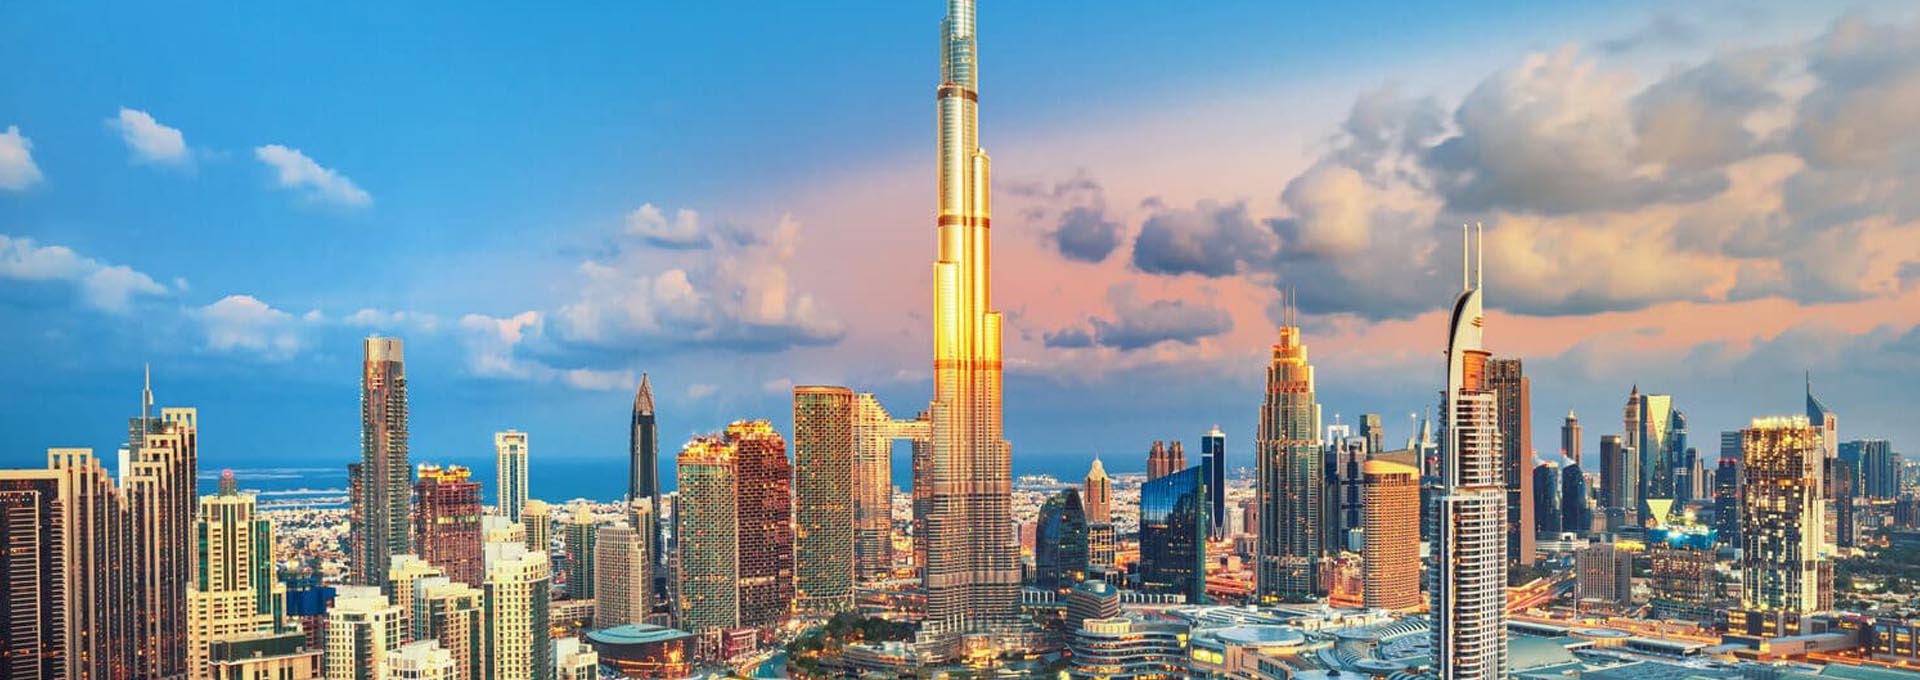 Burj-Khalifa Dubái